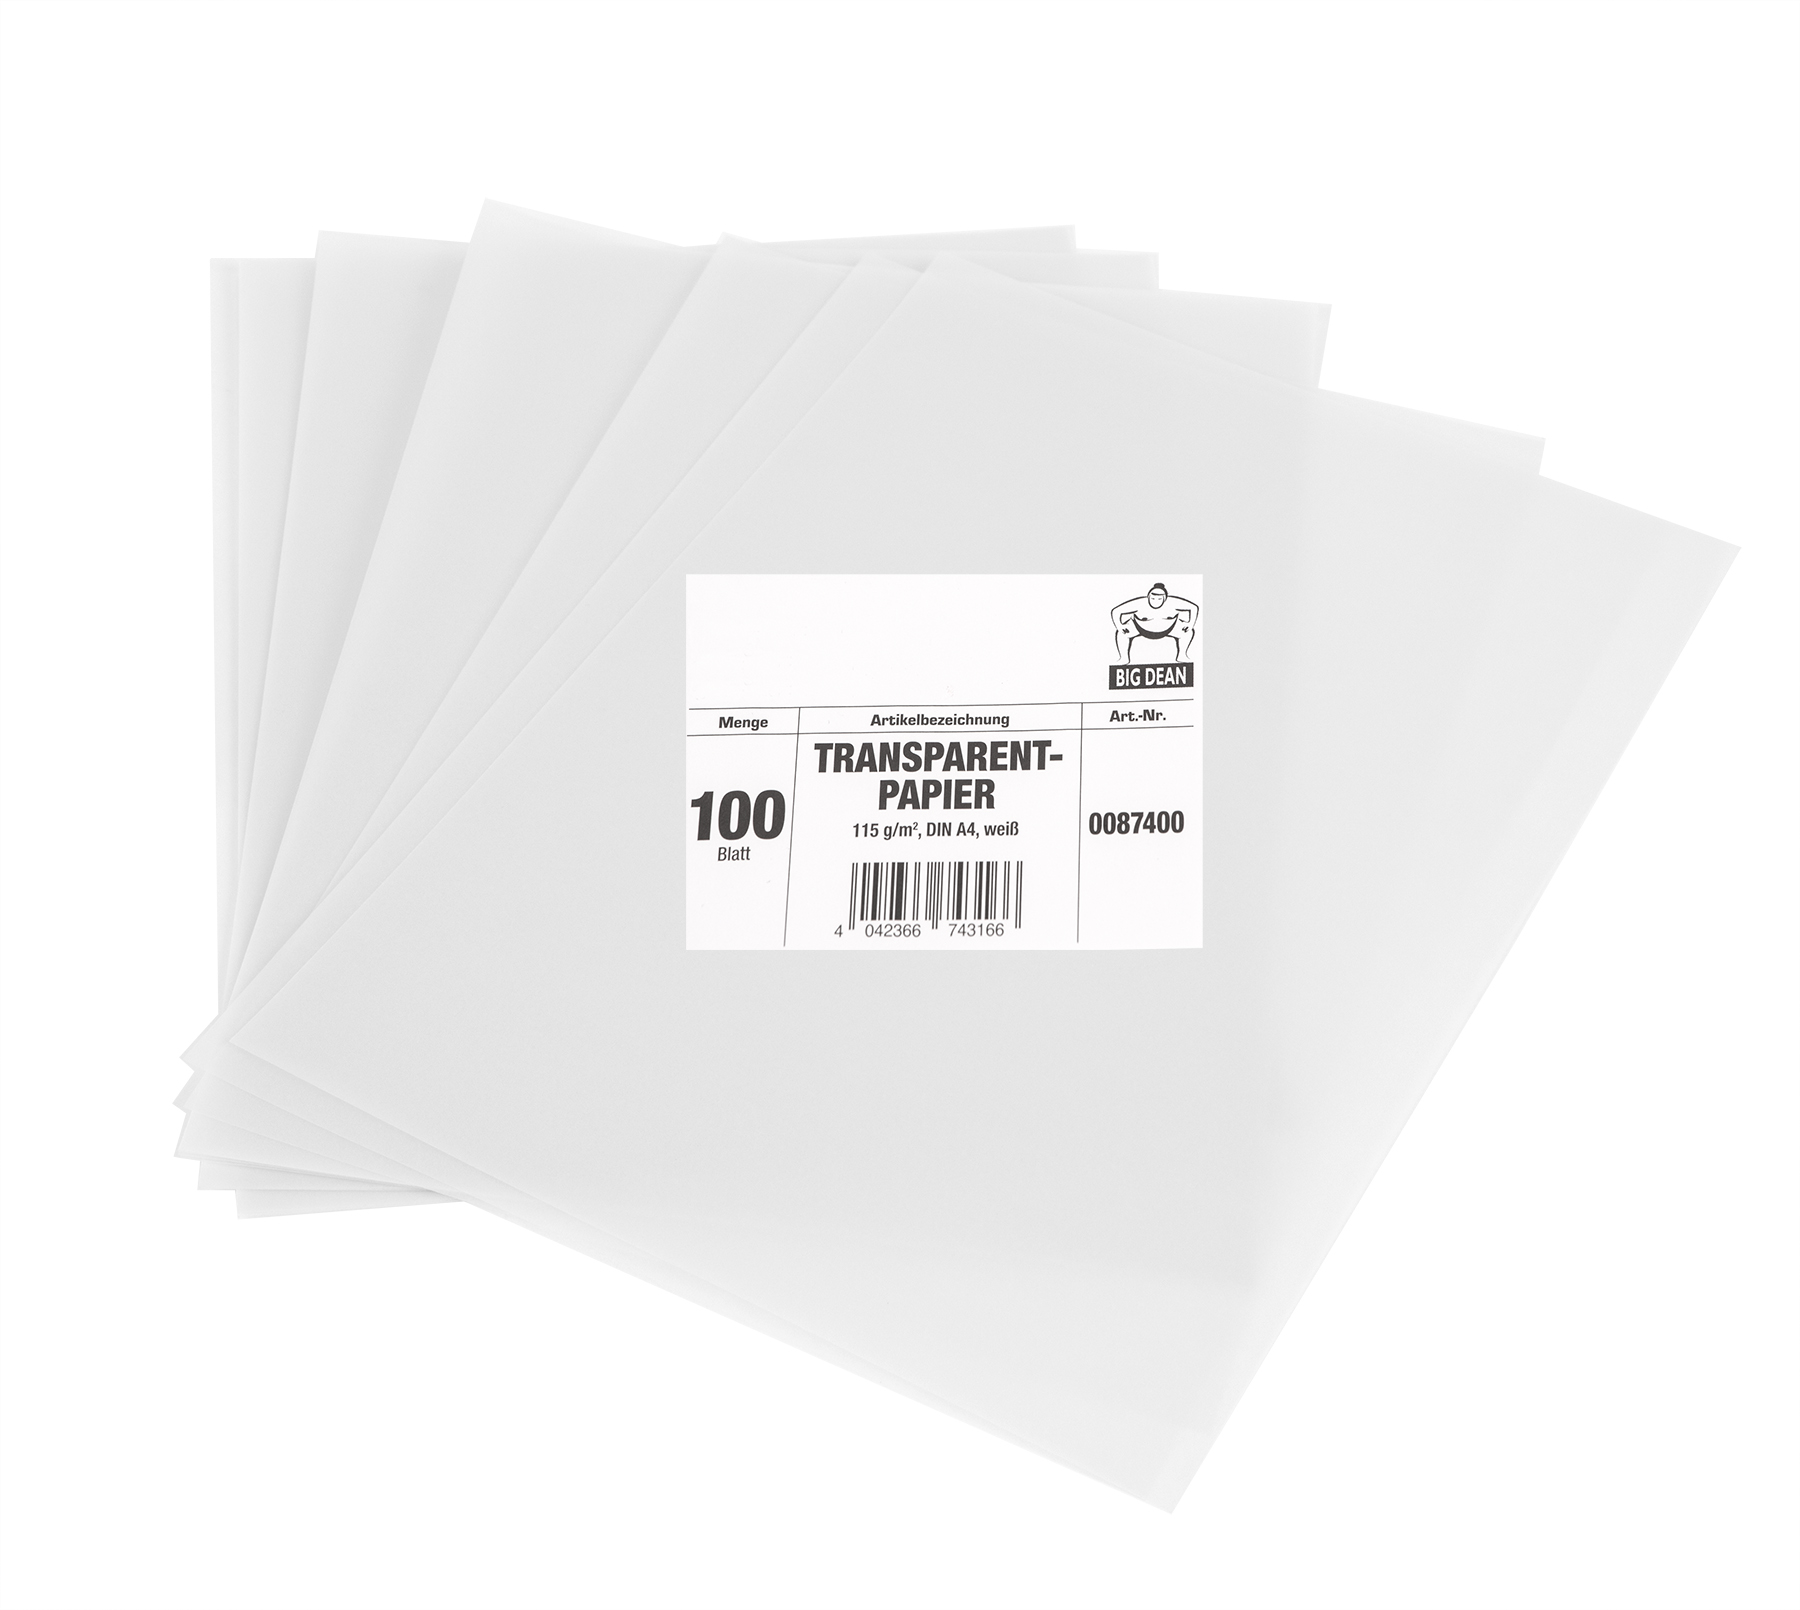 50 Blatt DIN lang Gmund Transparentpapier 100g Farbe schwarz transparent FPA-125 